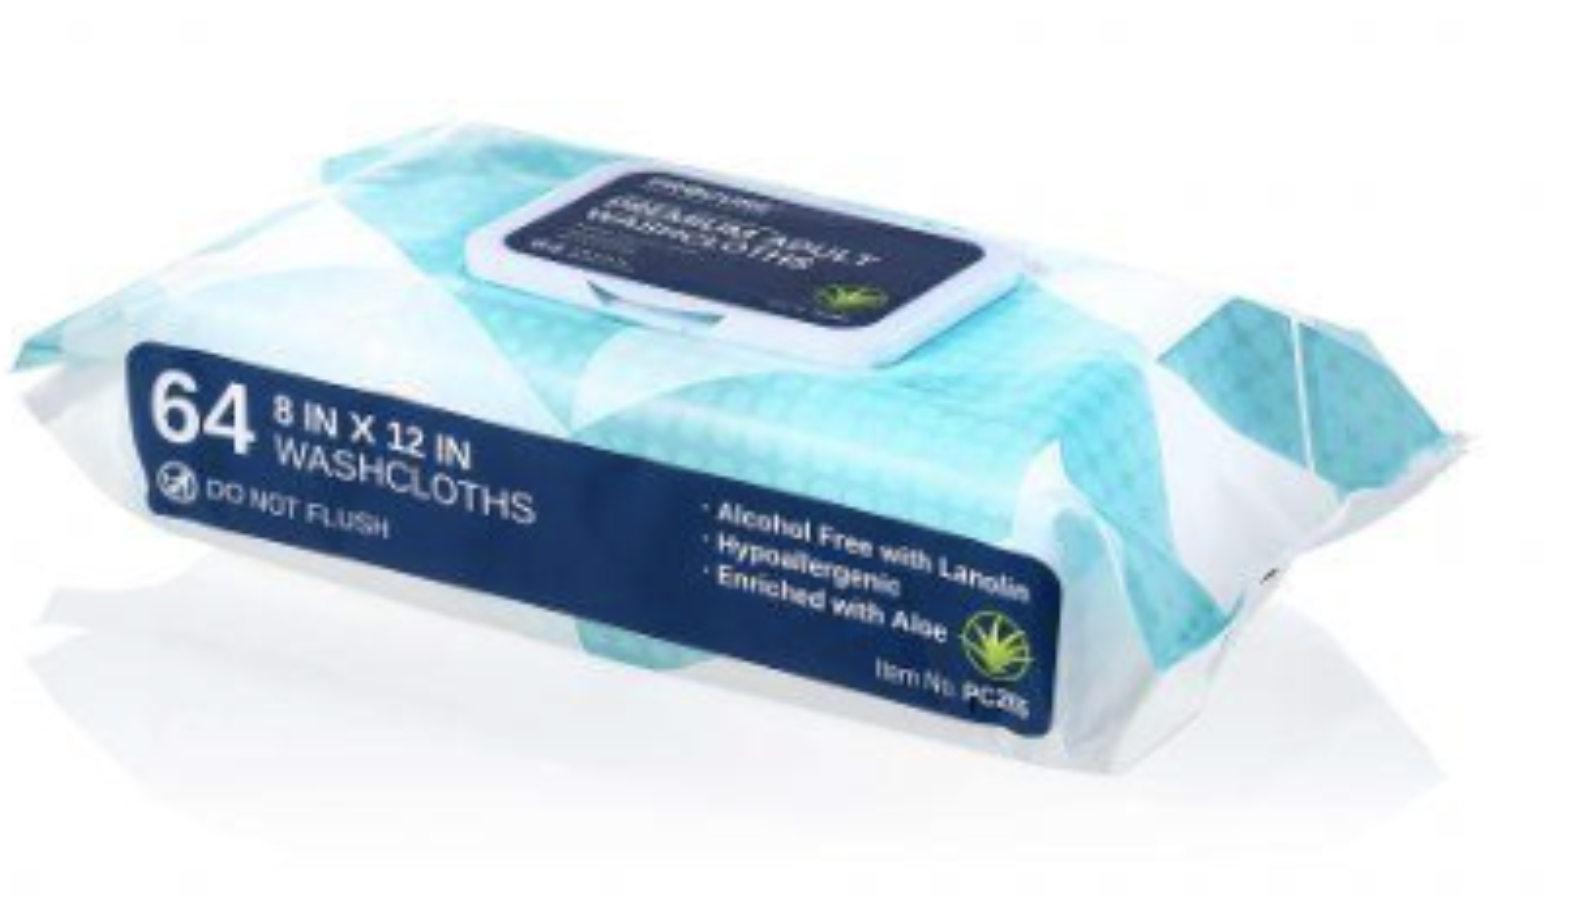 ProCure Wipes Premoistened Washcloth Soft Pack Peel Back Top 8"x 12" - 68ea/pk 12pk/cs Image